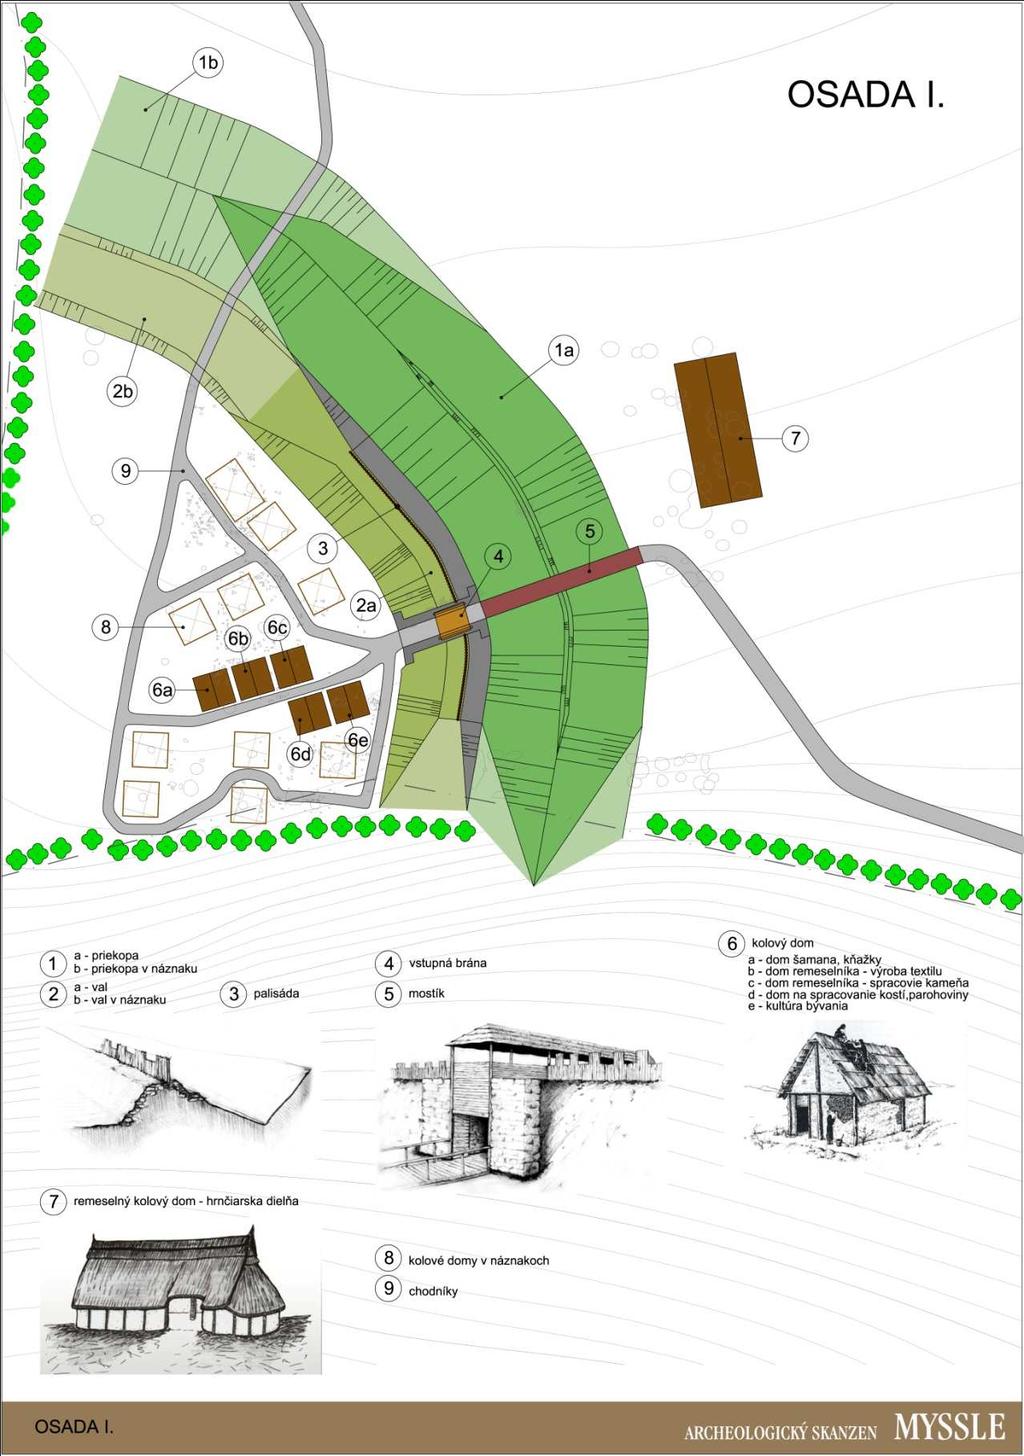 Fig. 7 Plan of village